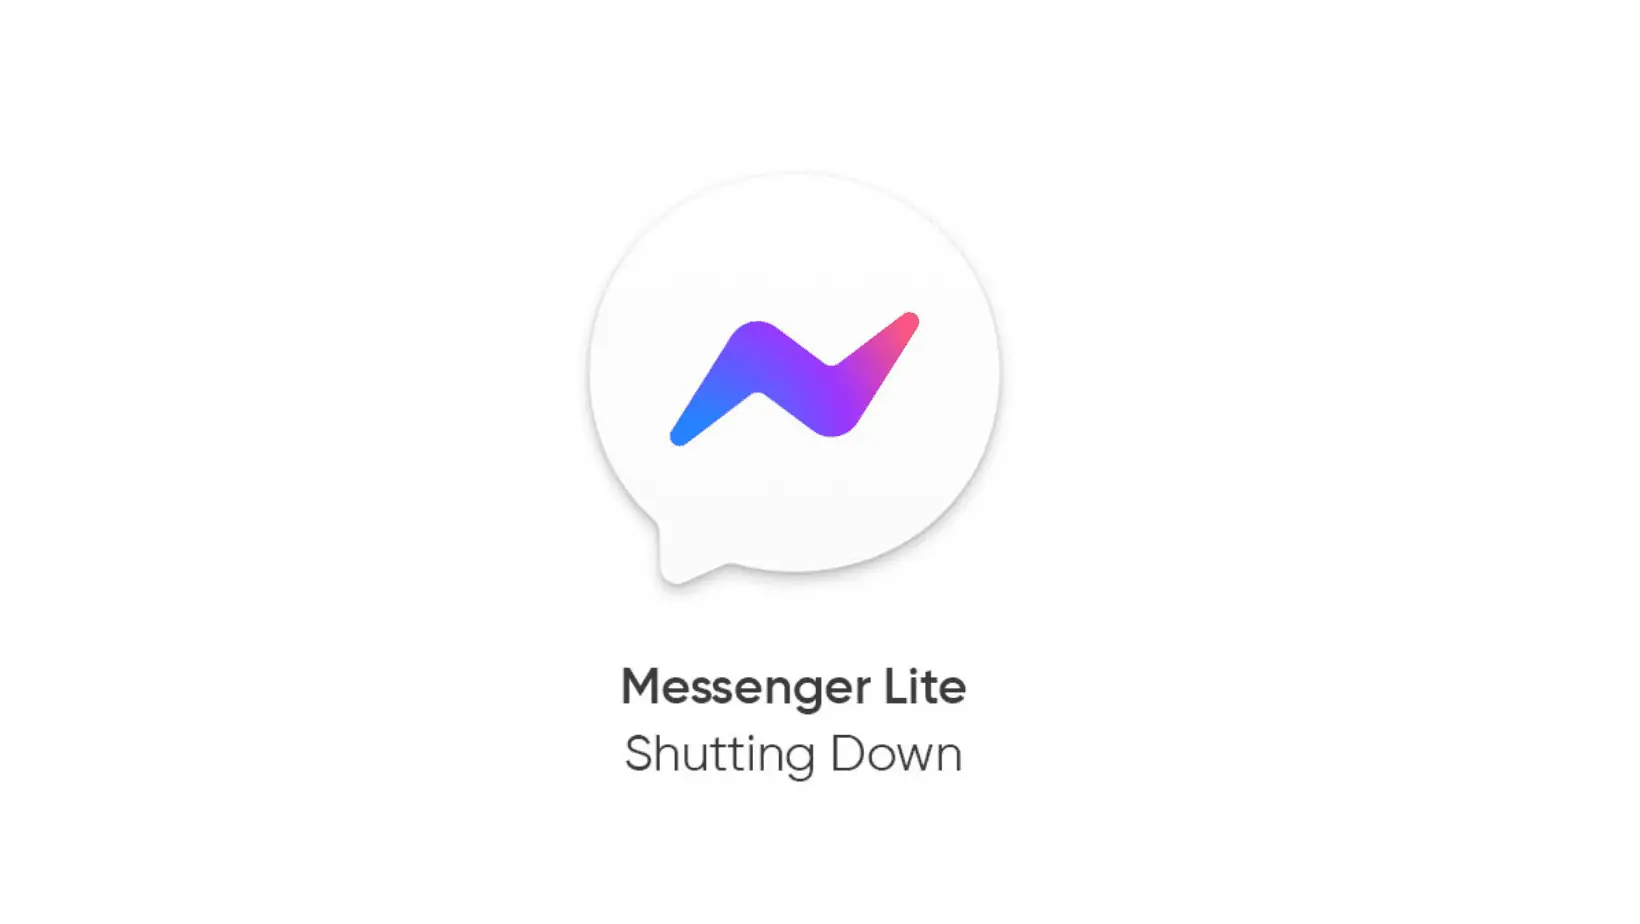 Meta Drops Messenger Lite, Shifts Focus to Main App